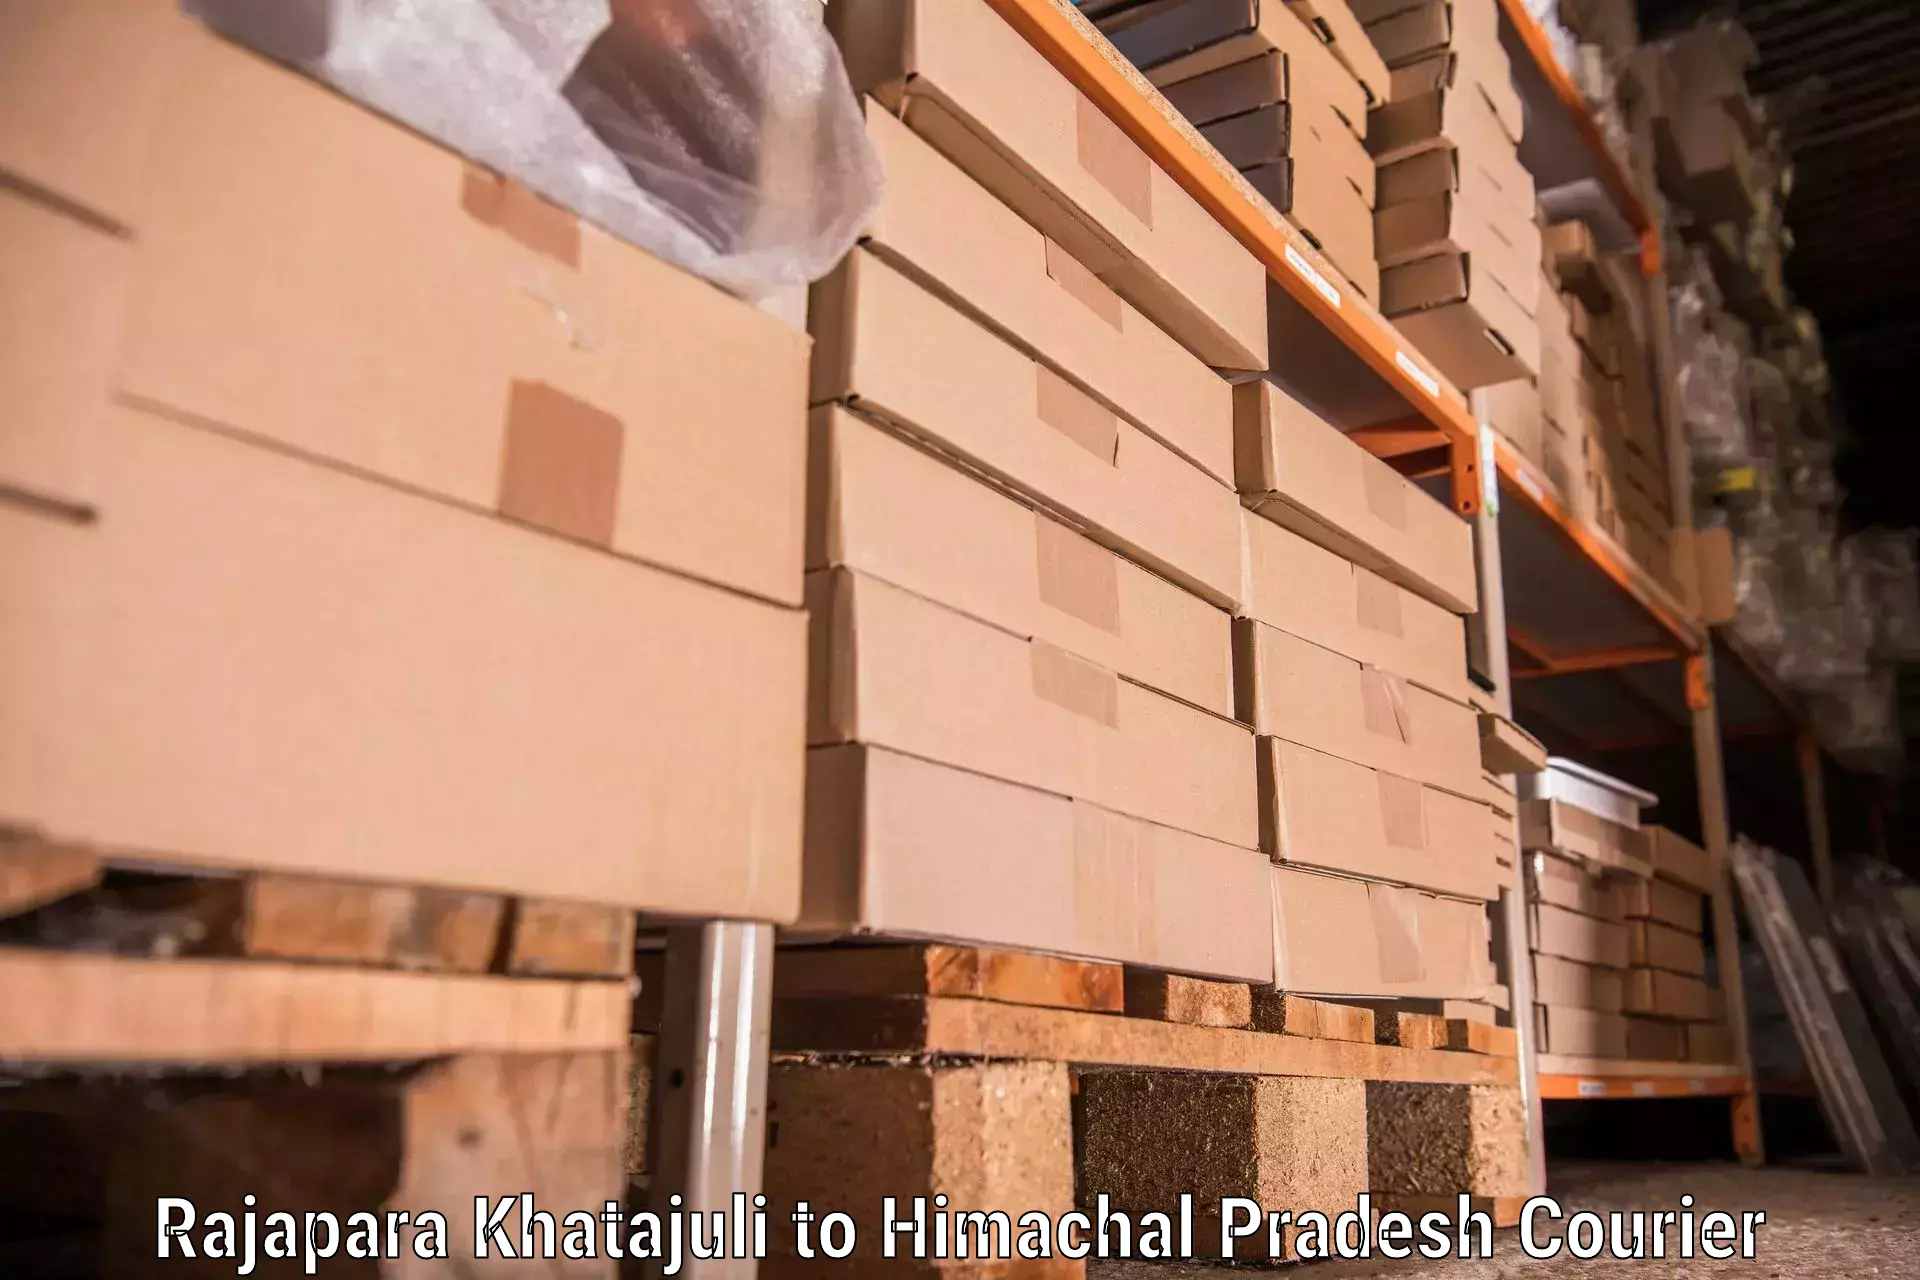 Professional moving company Rajapara Khatajuli to Parwanoo